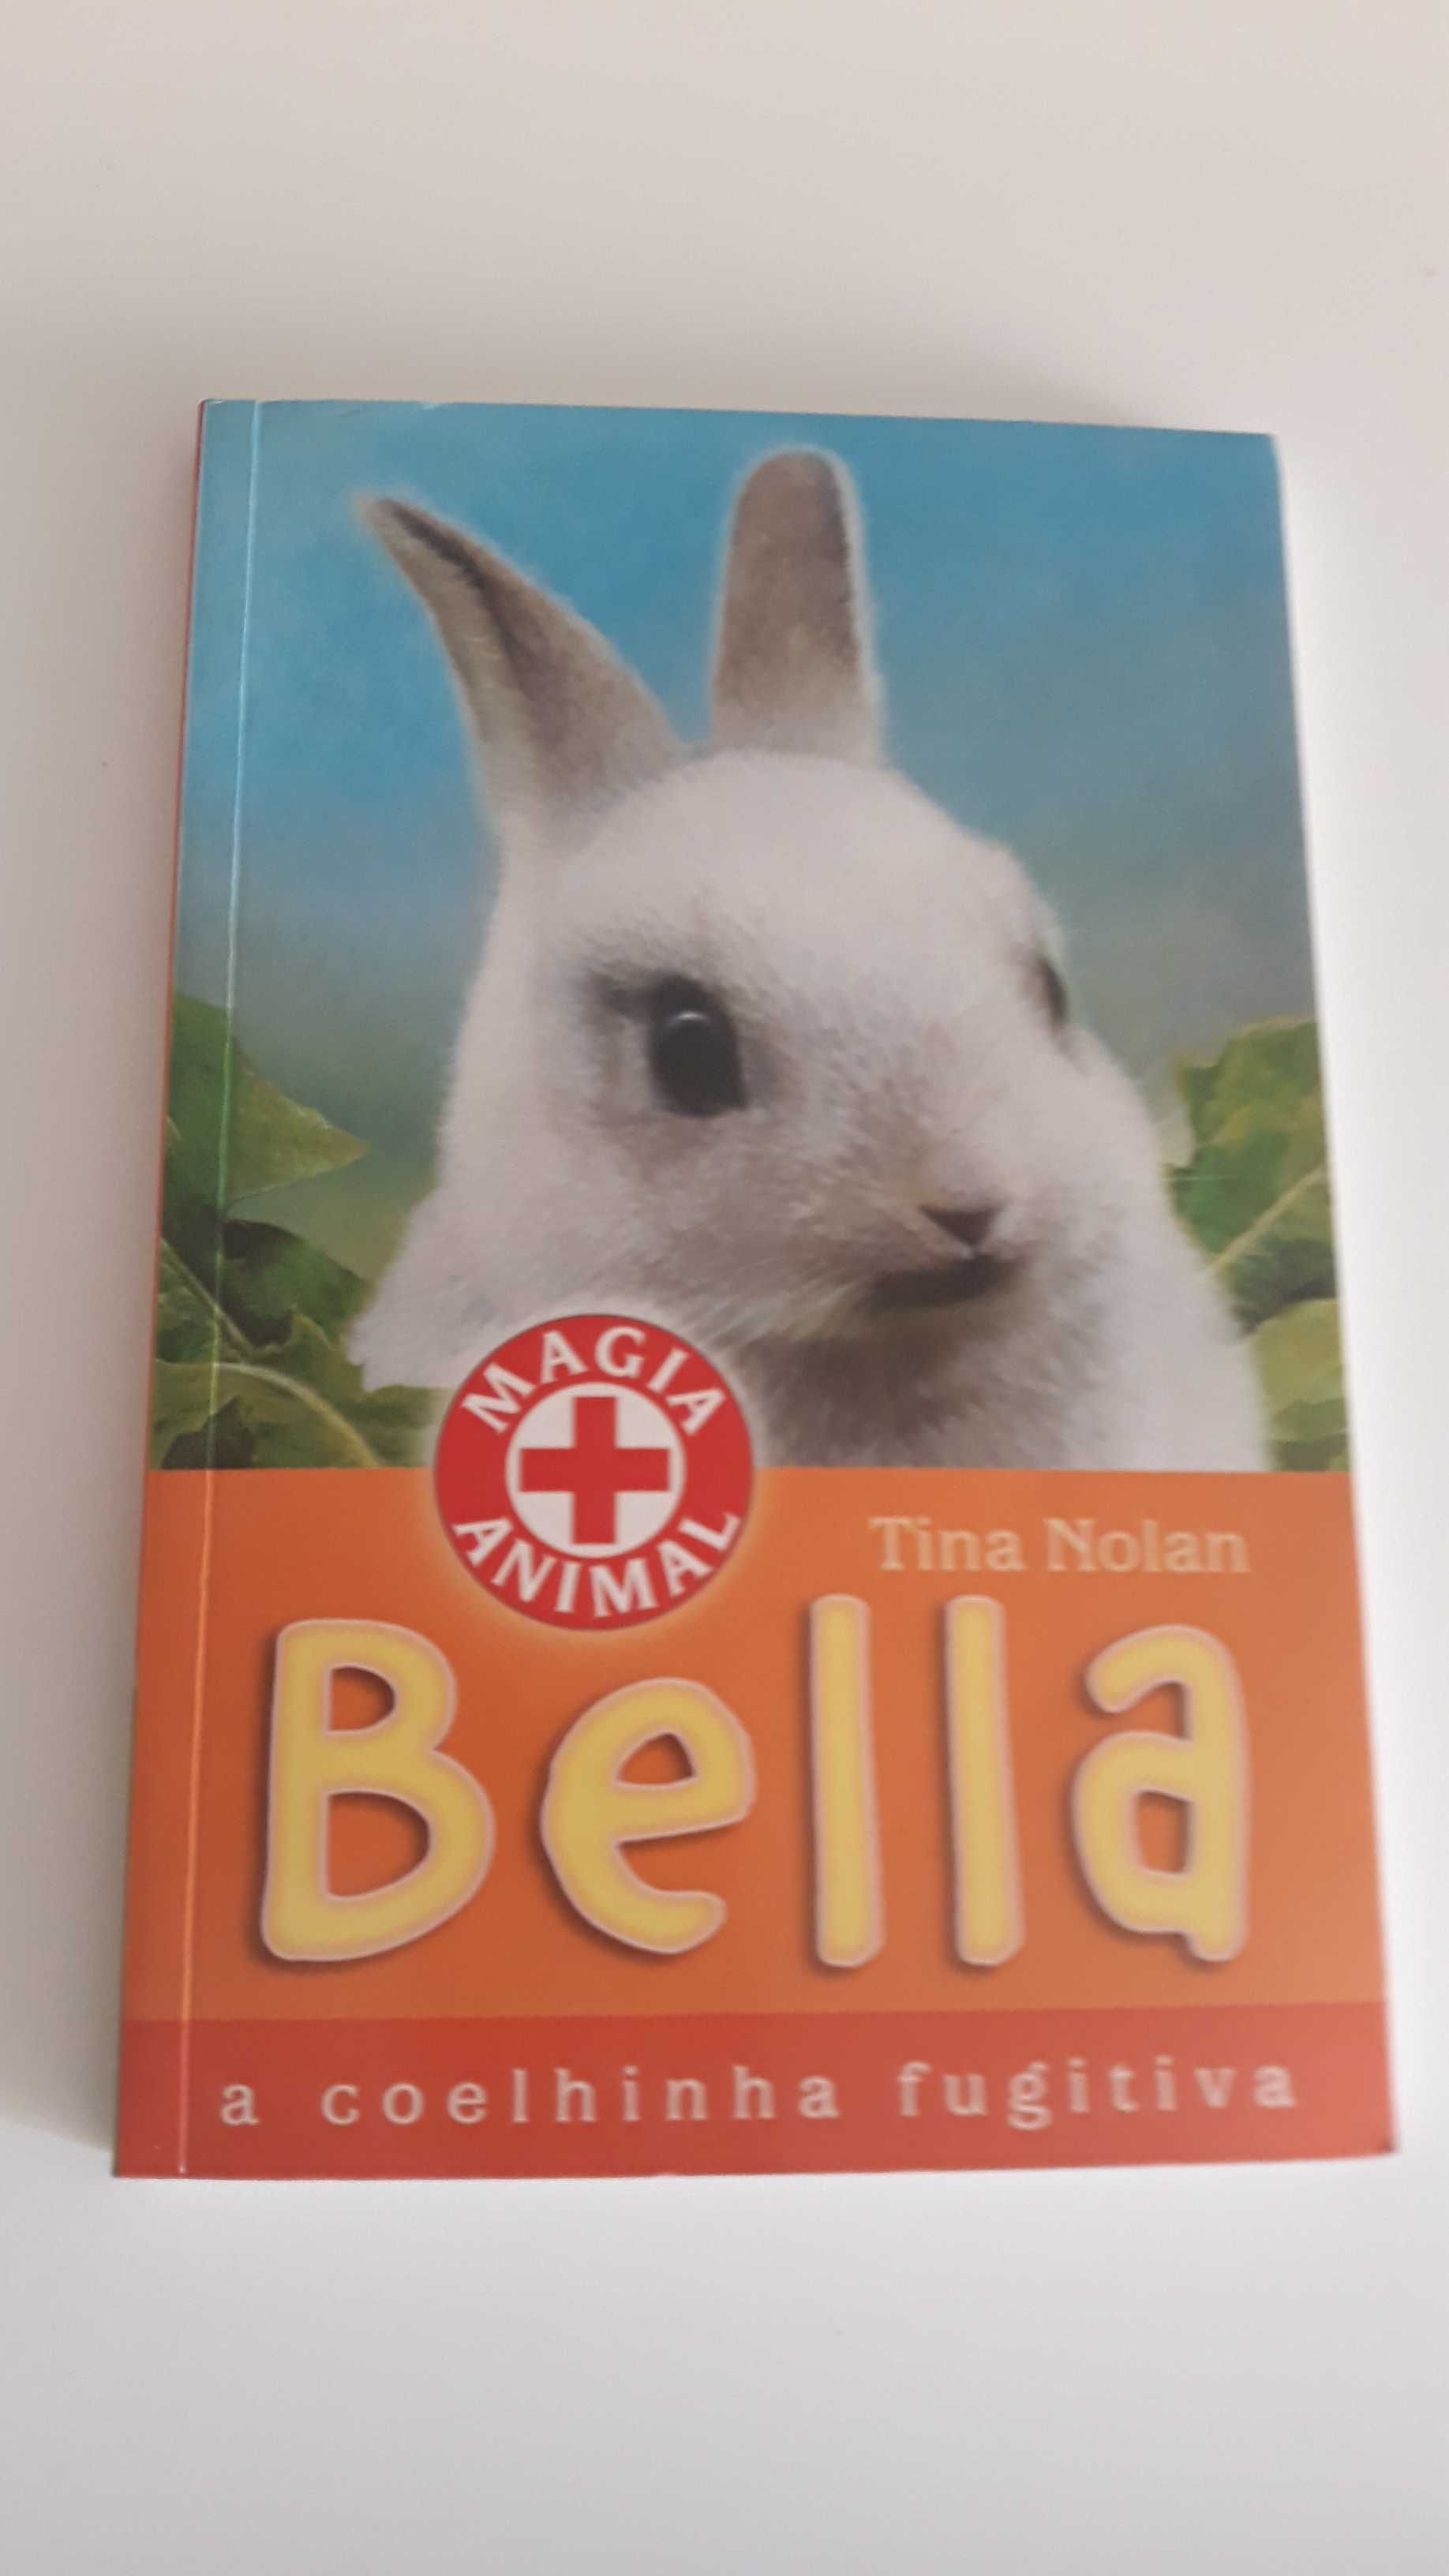 Bella - A Coelhinha Fugitiva, de Tina Nolan